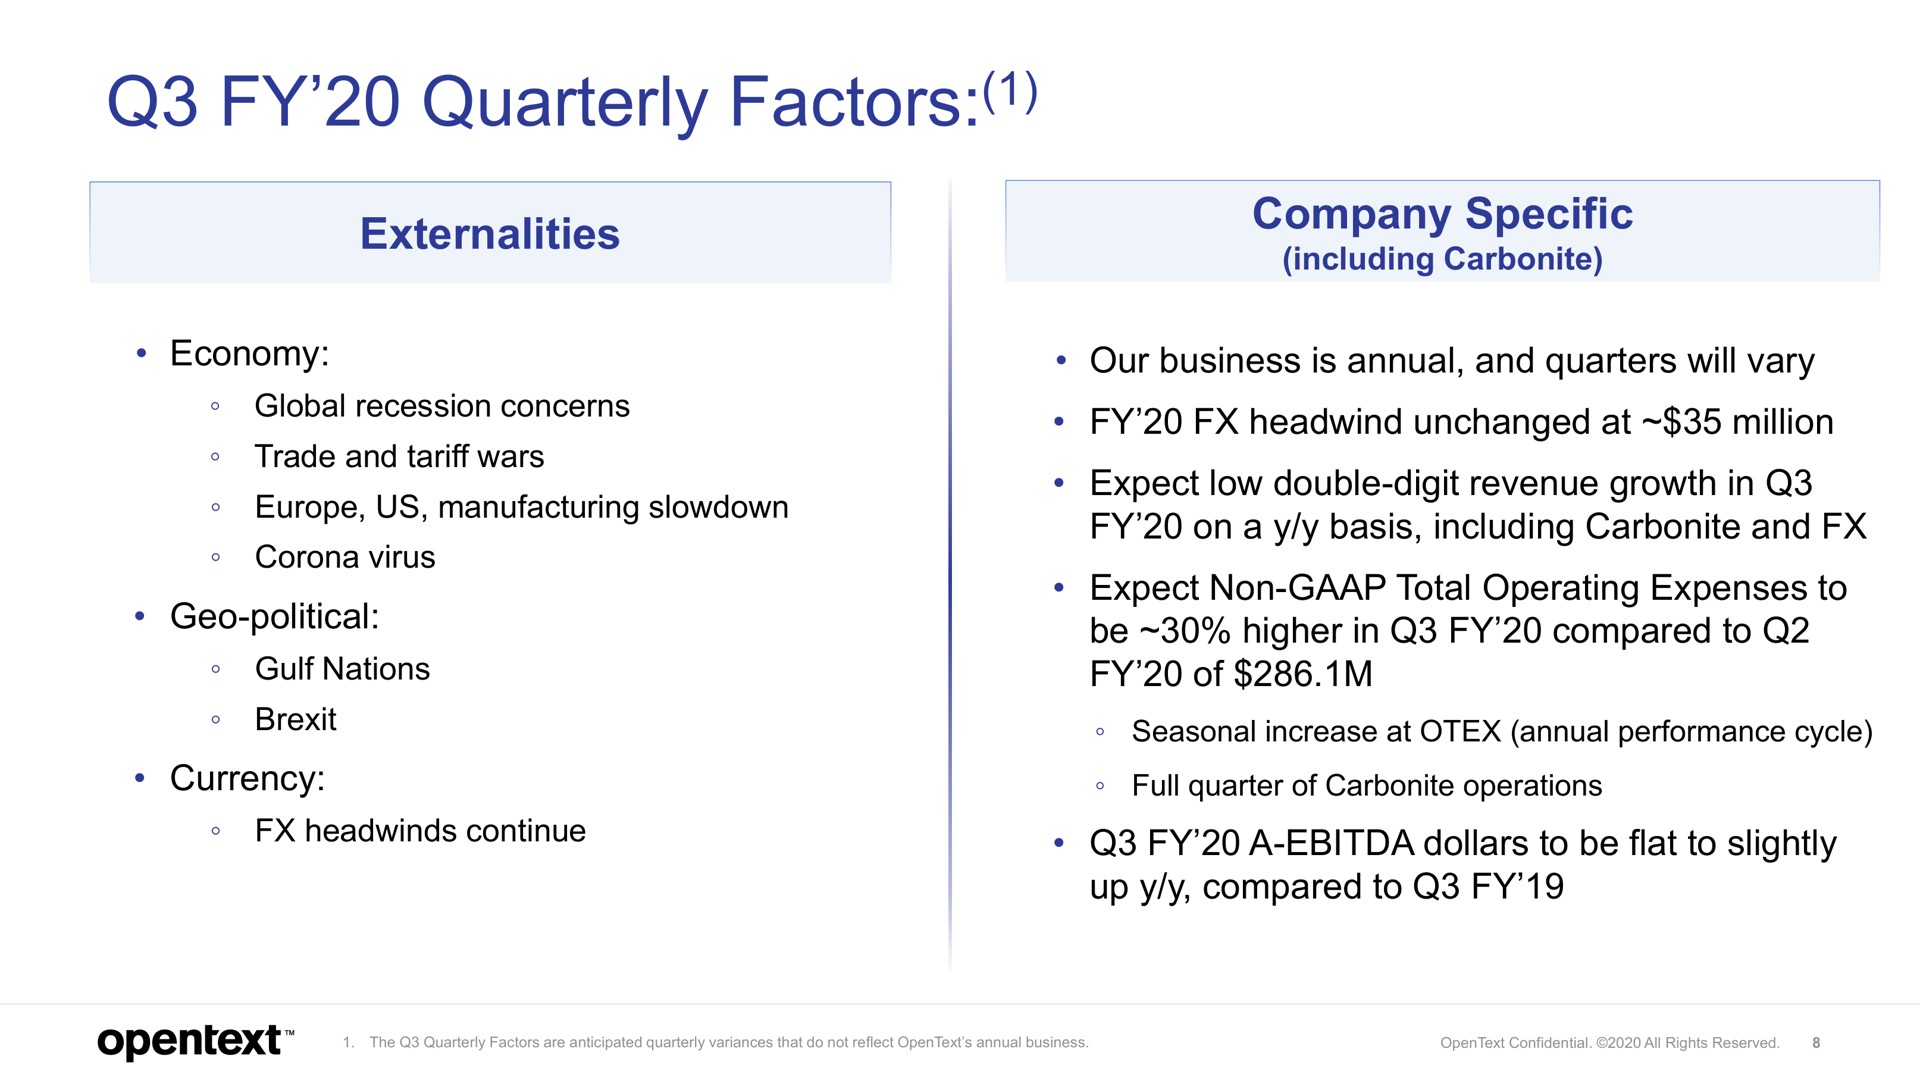 quarterly factors externalities company specific | OpenText